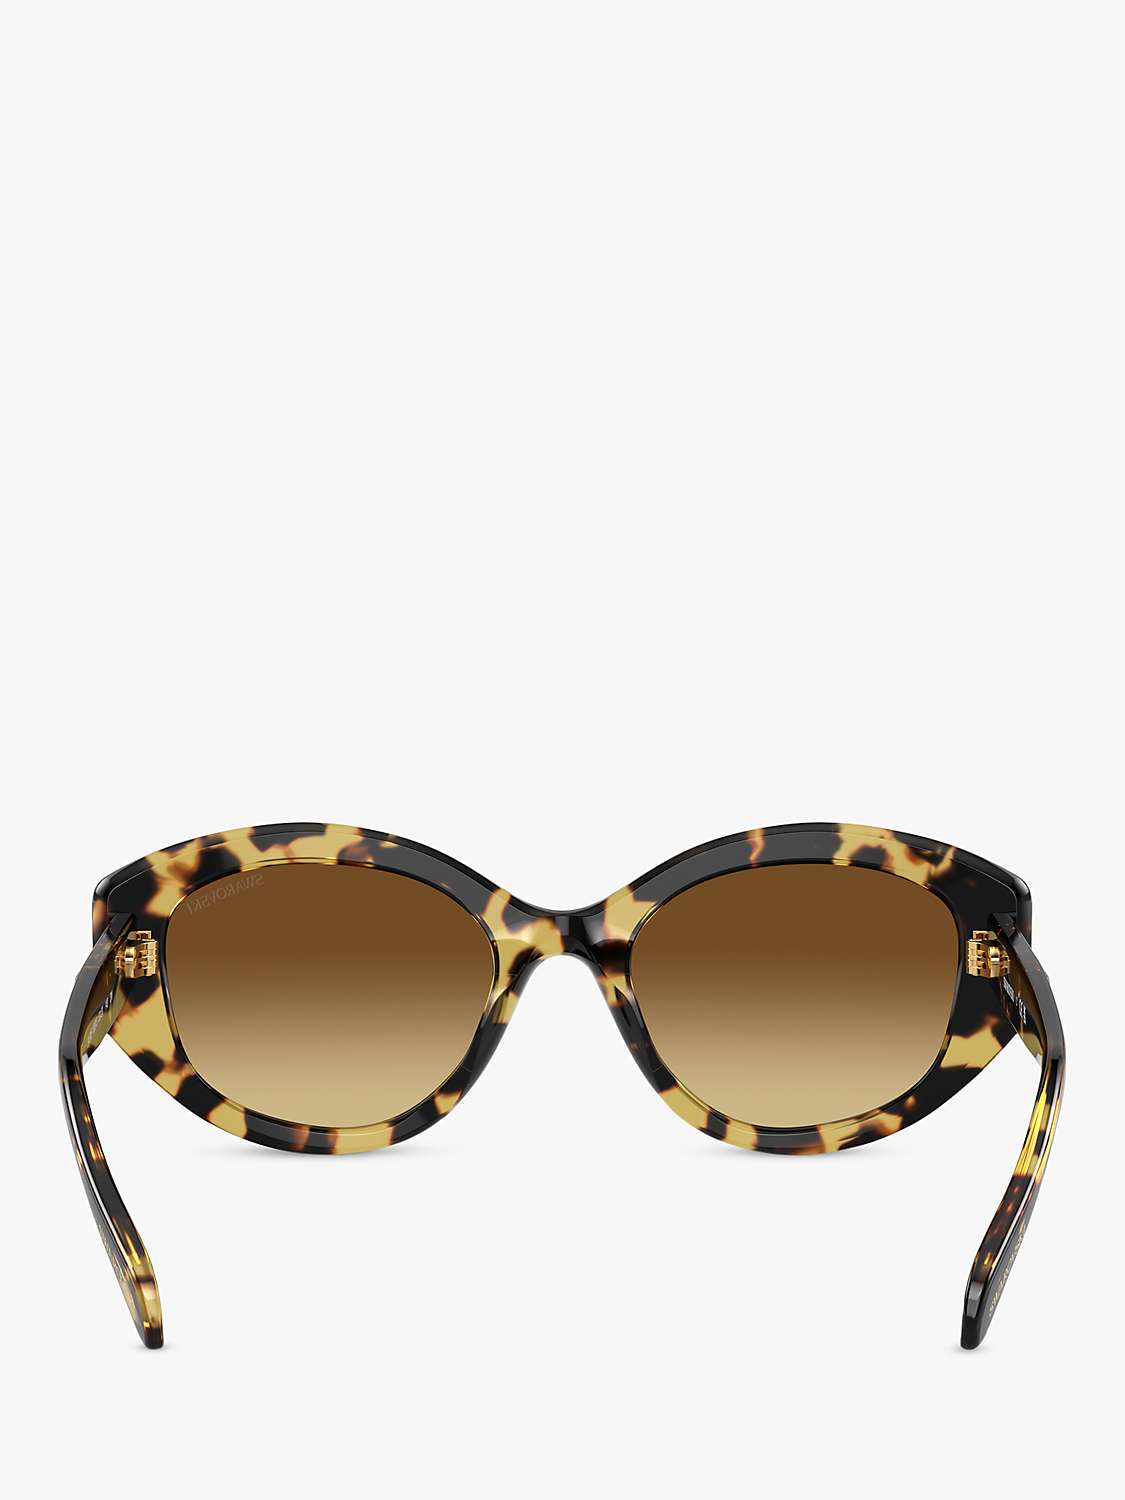 Buy Swarovski SK6005 Women's Irregular Sunglasses, Tortoiseshell/Brown Gradient Online at johnlewis.com